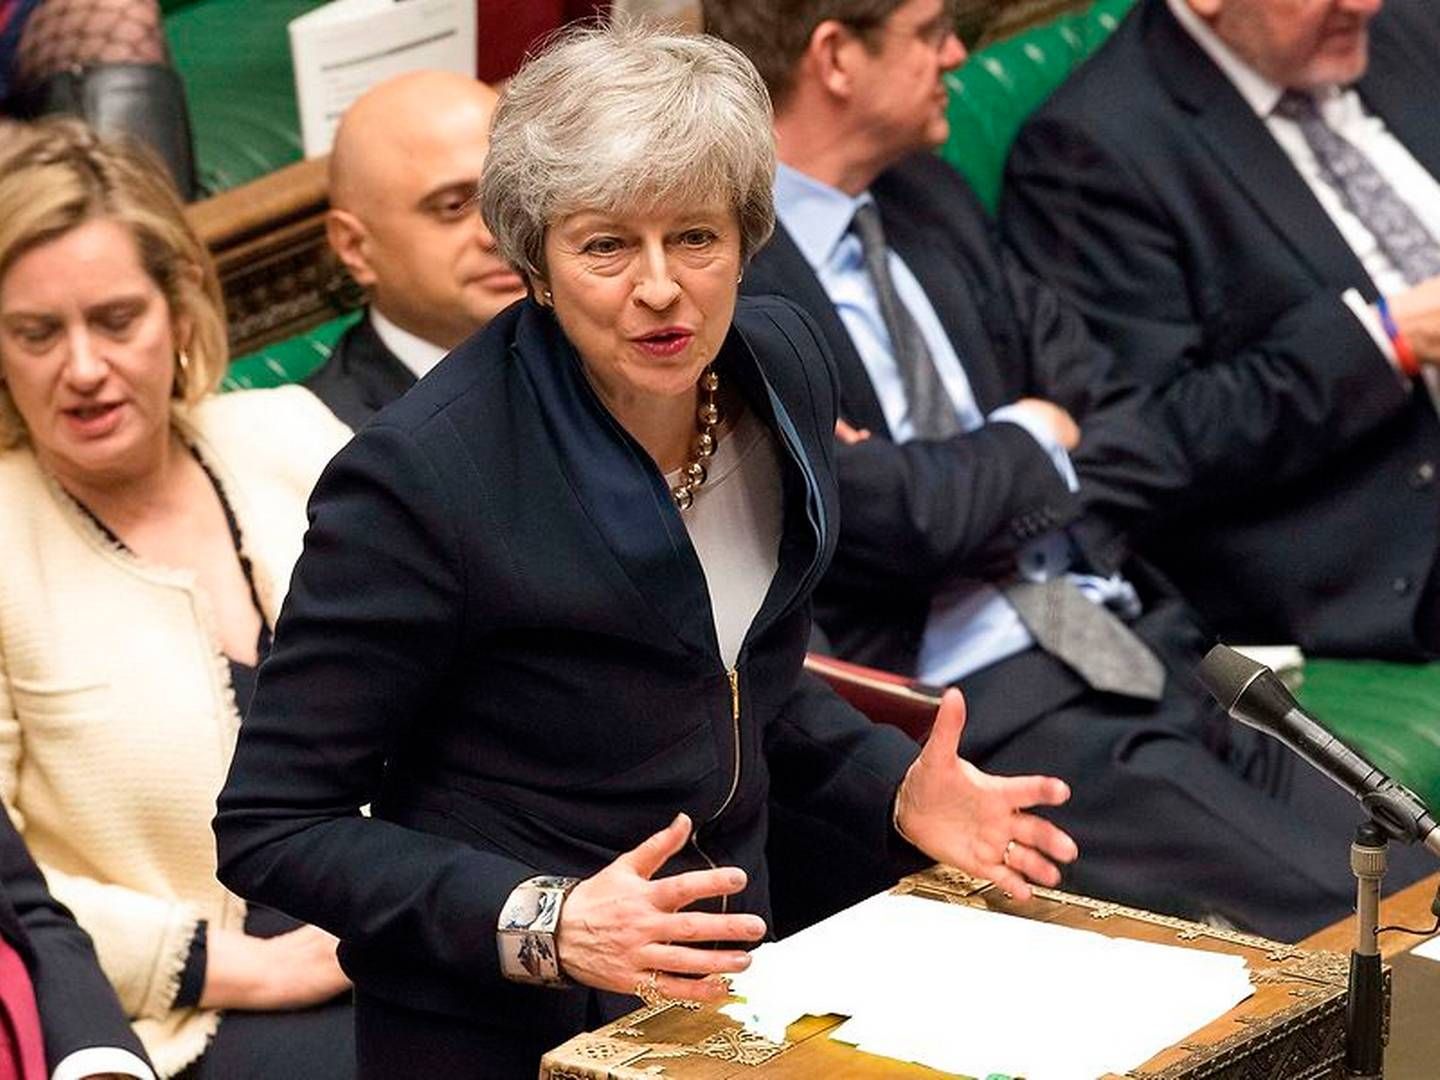 Den britiske premierminister Theresa May kan meget vel snart være fortid i Downing Street 10. | Foto: Ritzau Scanpix / MARK DUFFY / UK PARLIAMENT / AFP